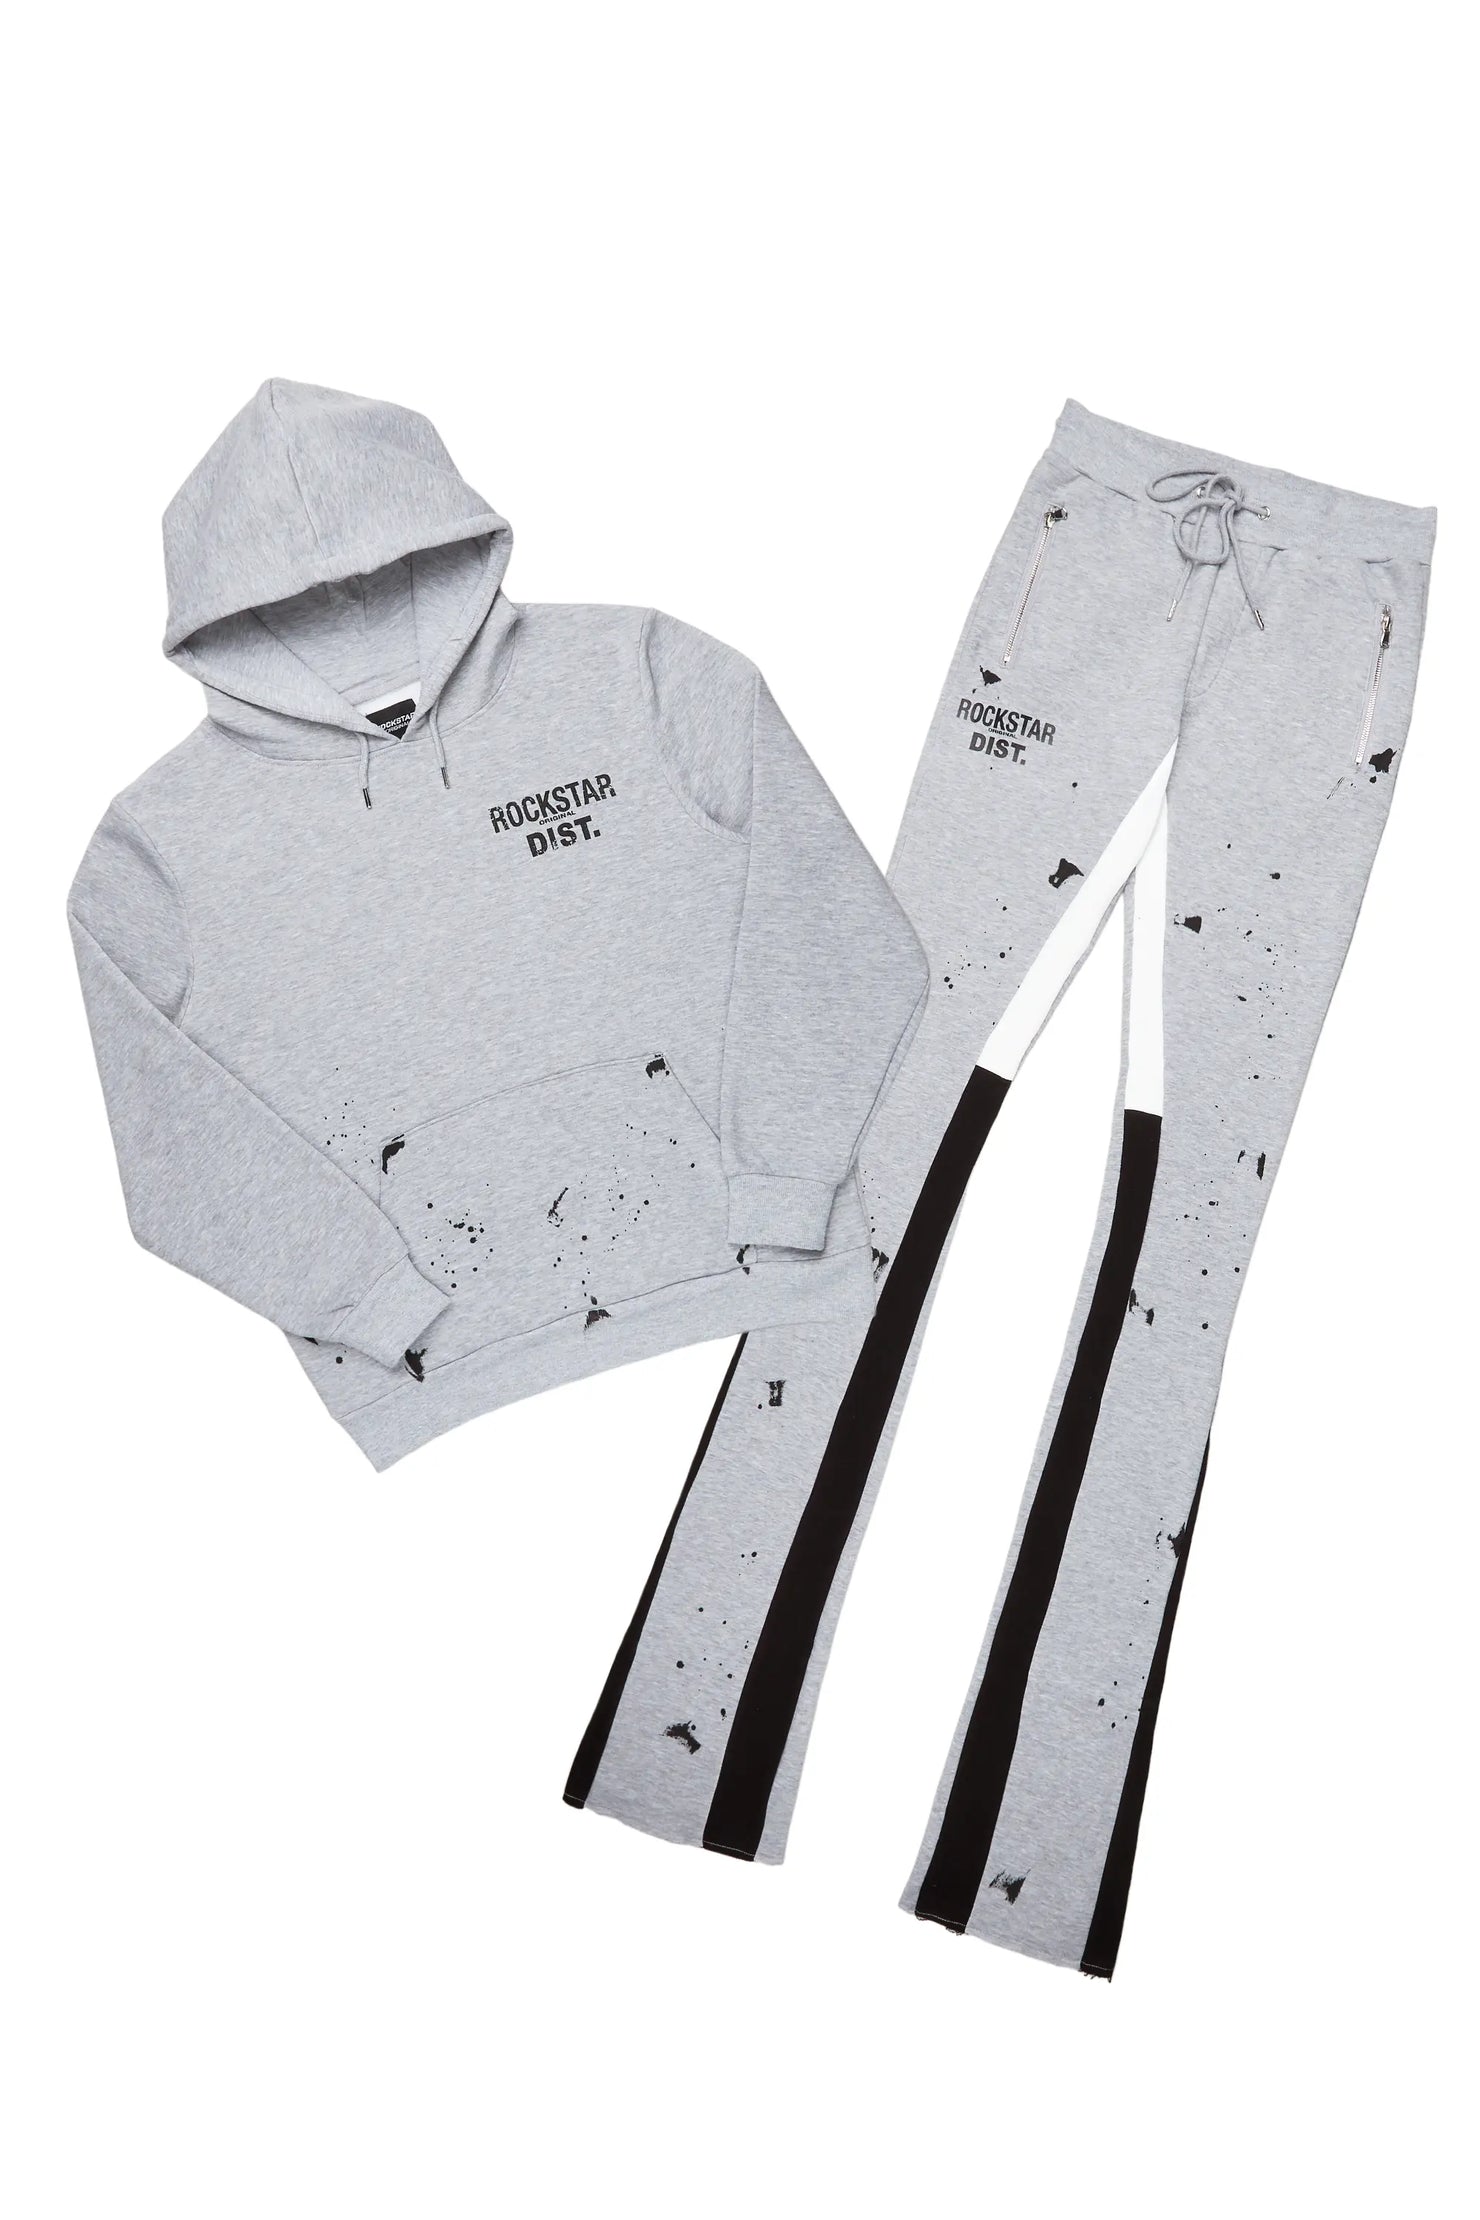 Raffer Grey/White Hoodie/Super Stacked Flare Pant Set– Rockstar